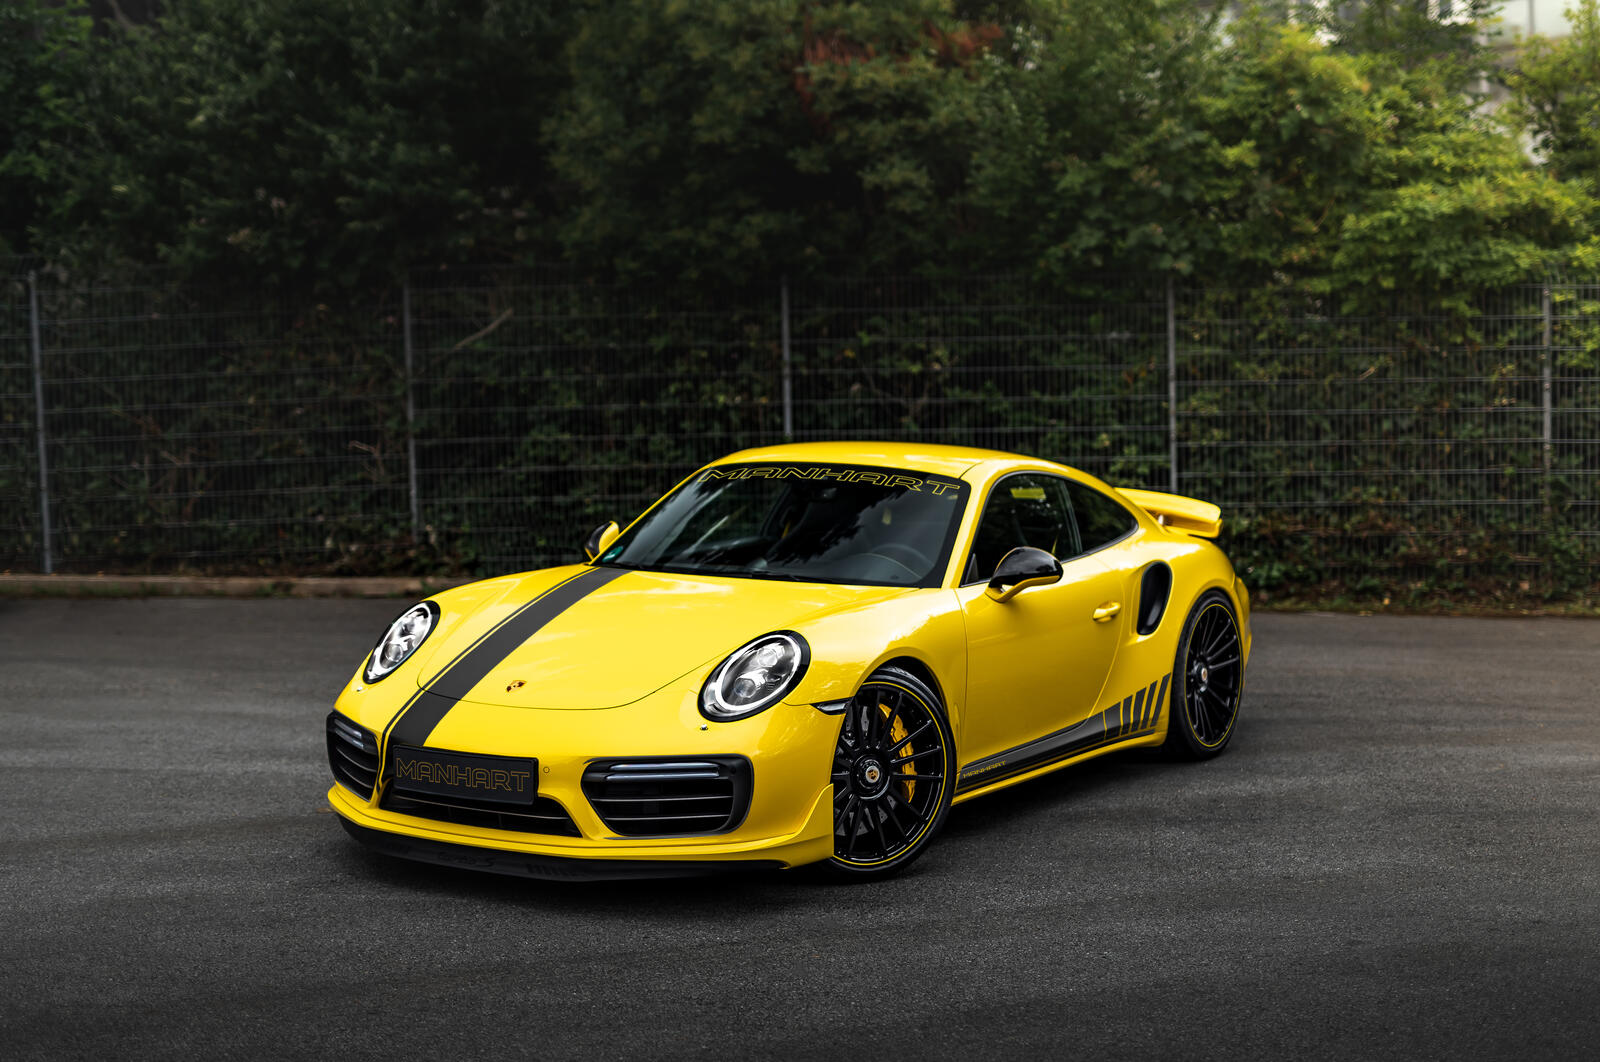 Wallpapers Porsche 911 cars yellow on the desktop